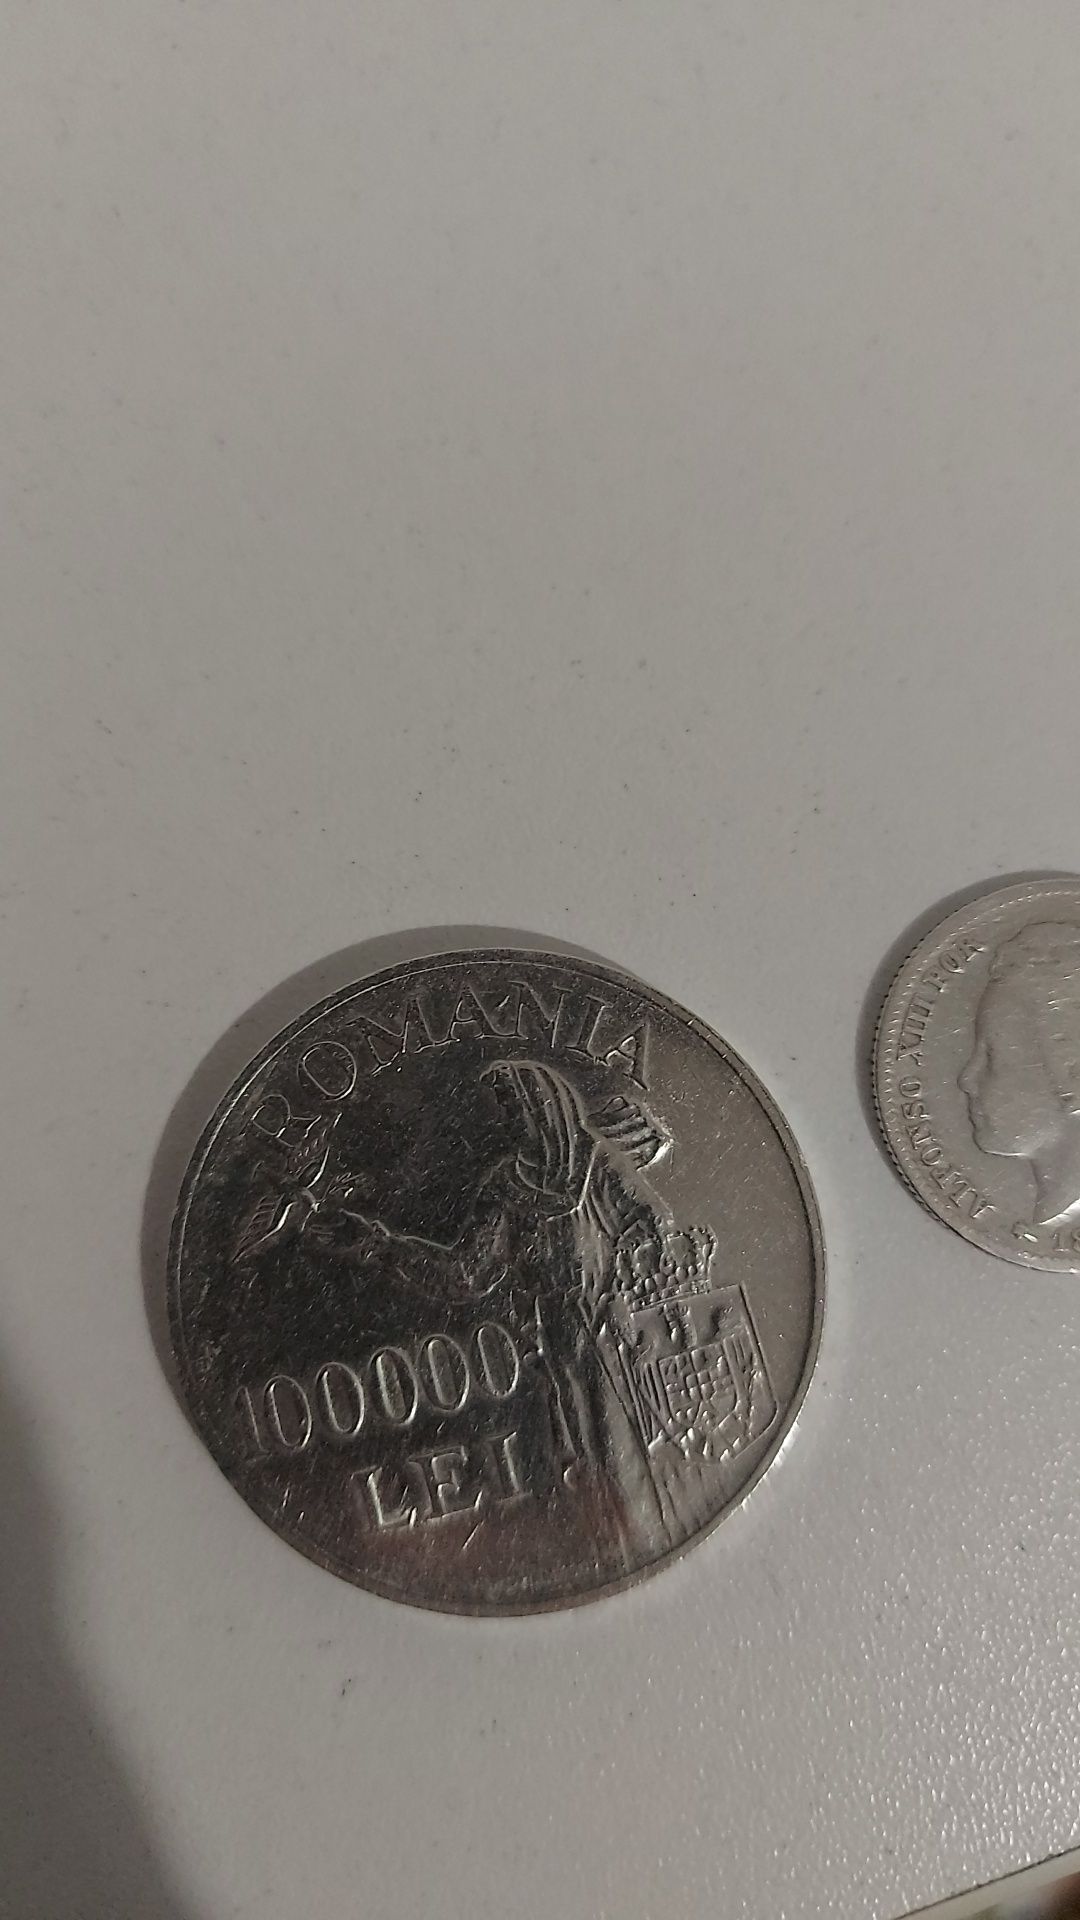 Vand 3 monede din argint 100% originale.